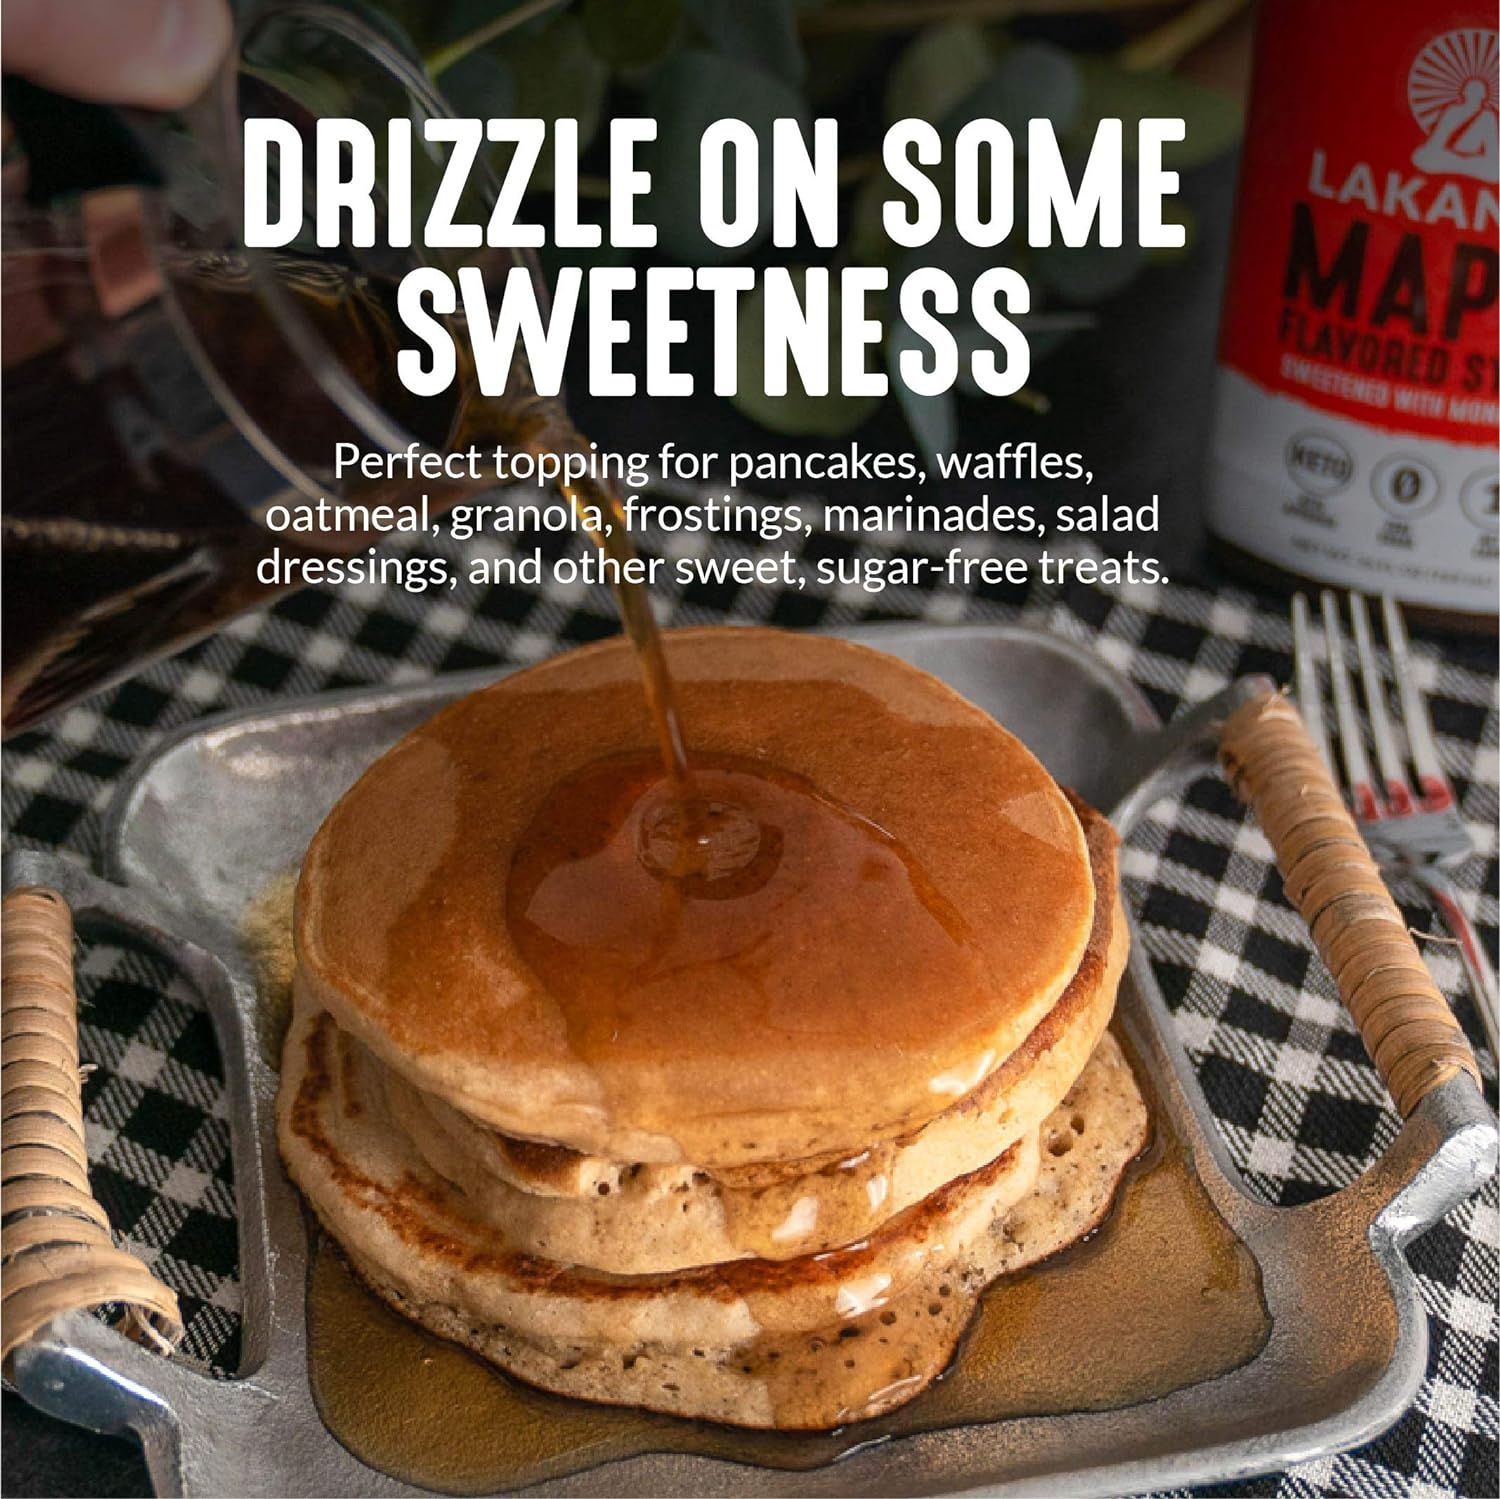 Lakanto Sugar Free Pancake Lovers Bundle - Pancake and Waffle Mix Plus Maple Syrup, Monk Fruit Sweetener with Erythritol, Breakfast of Champions